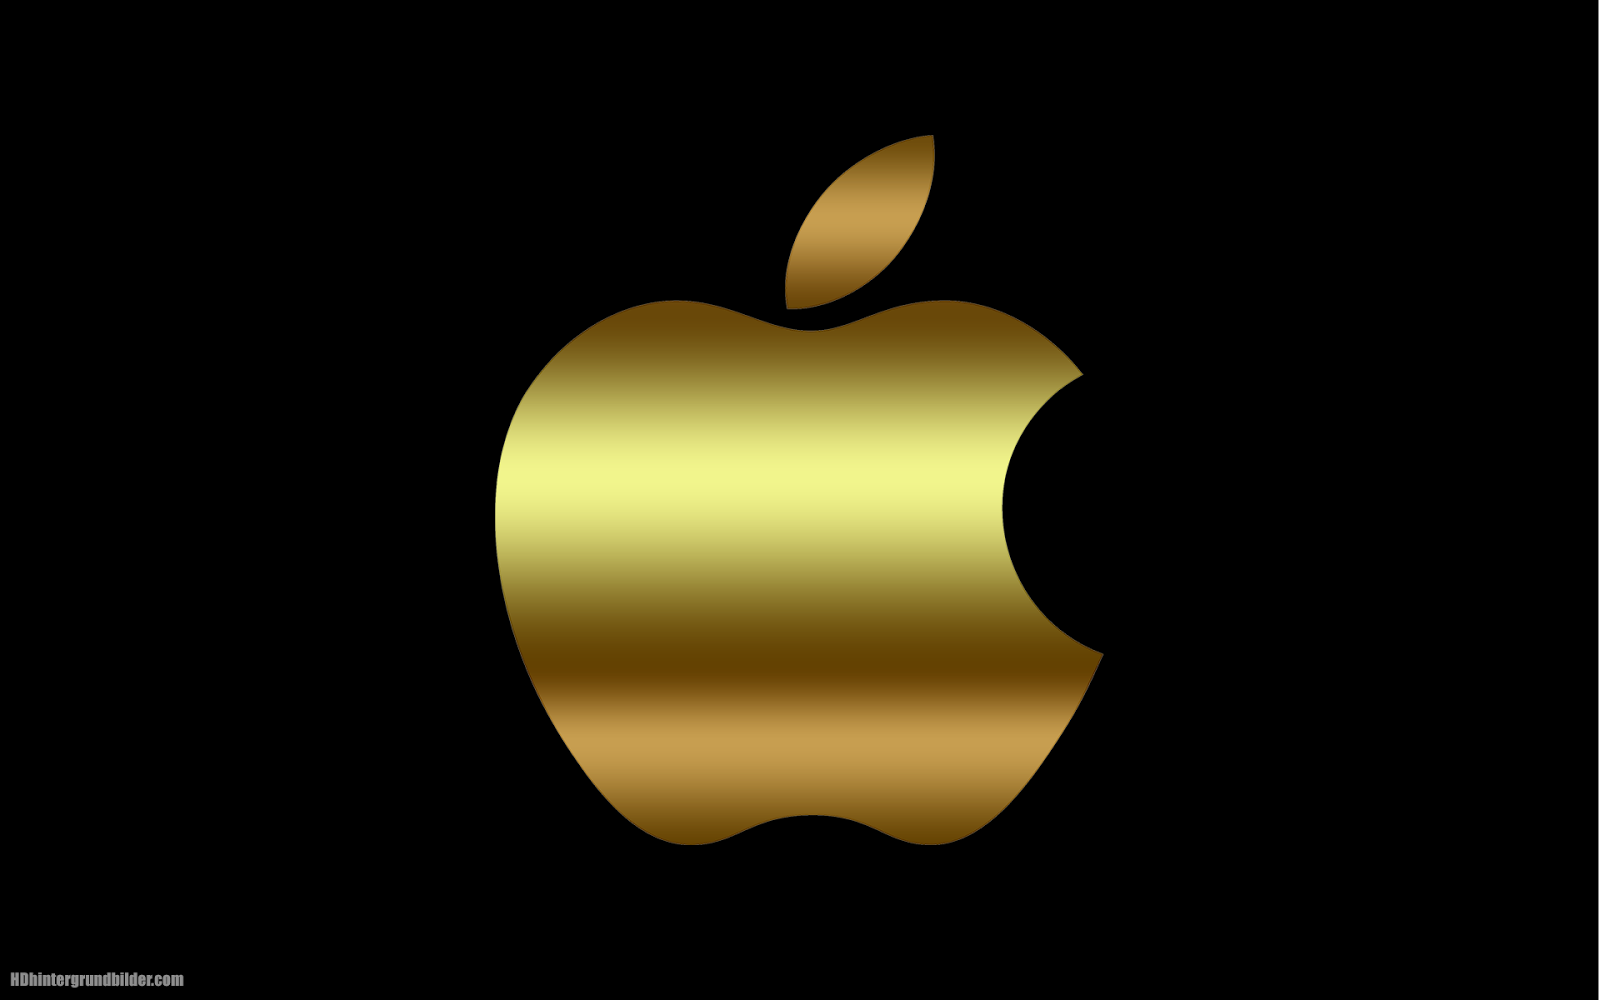 Download Apple Wallpaper Desktop iPhone Logo Macbook HQ PNG Image